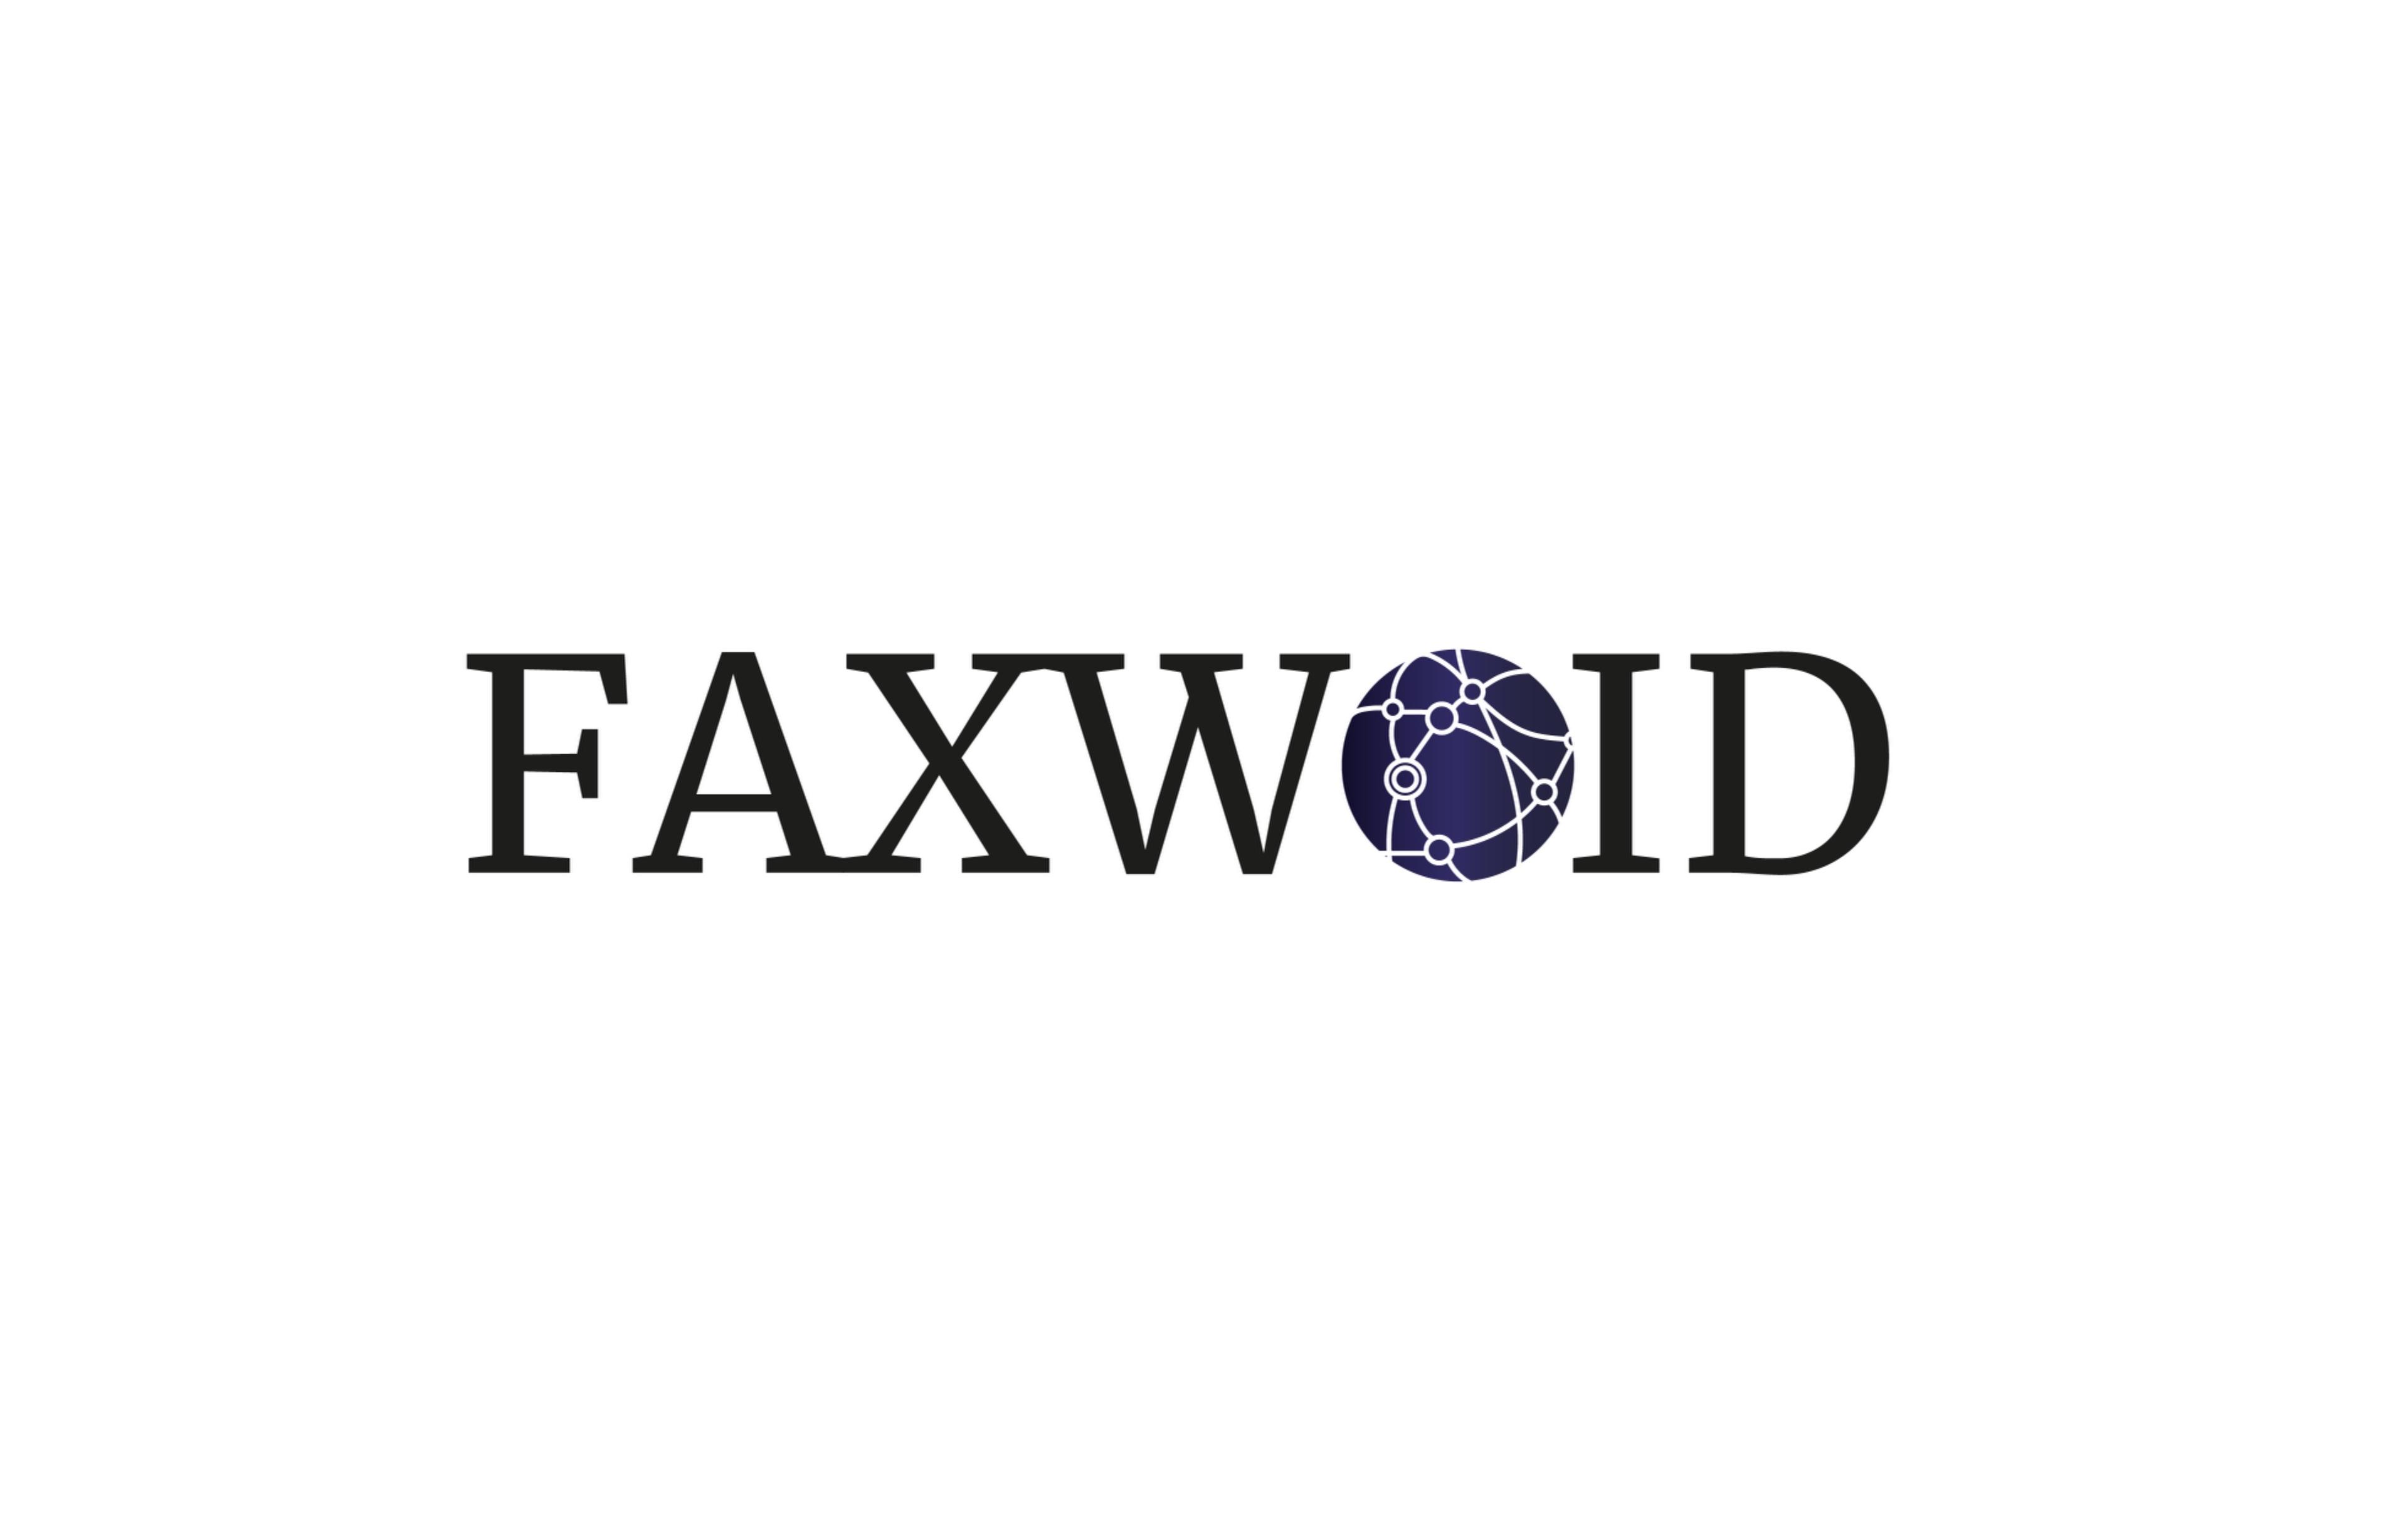 Team FAXWOID